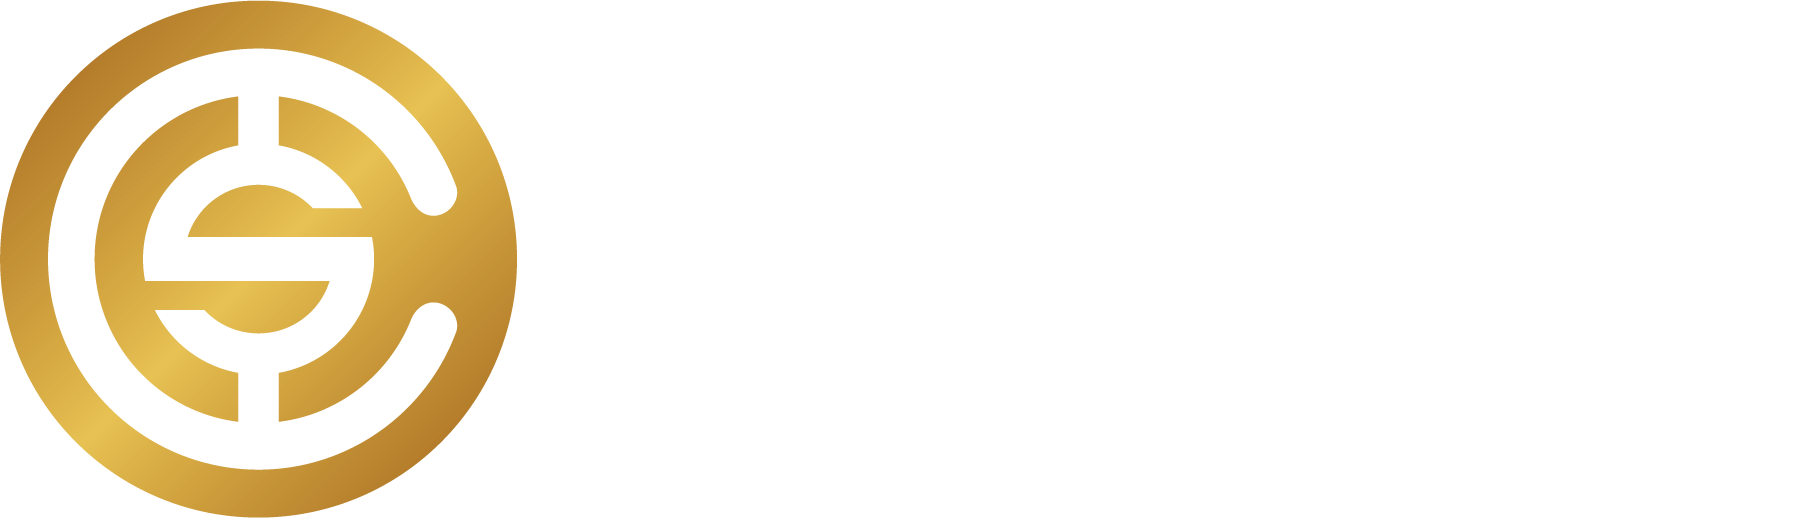 Coin Super Store logo